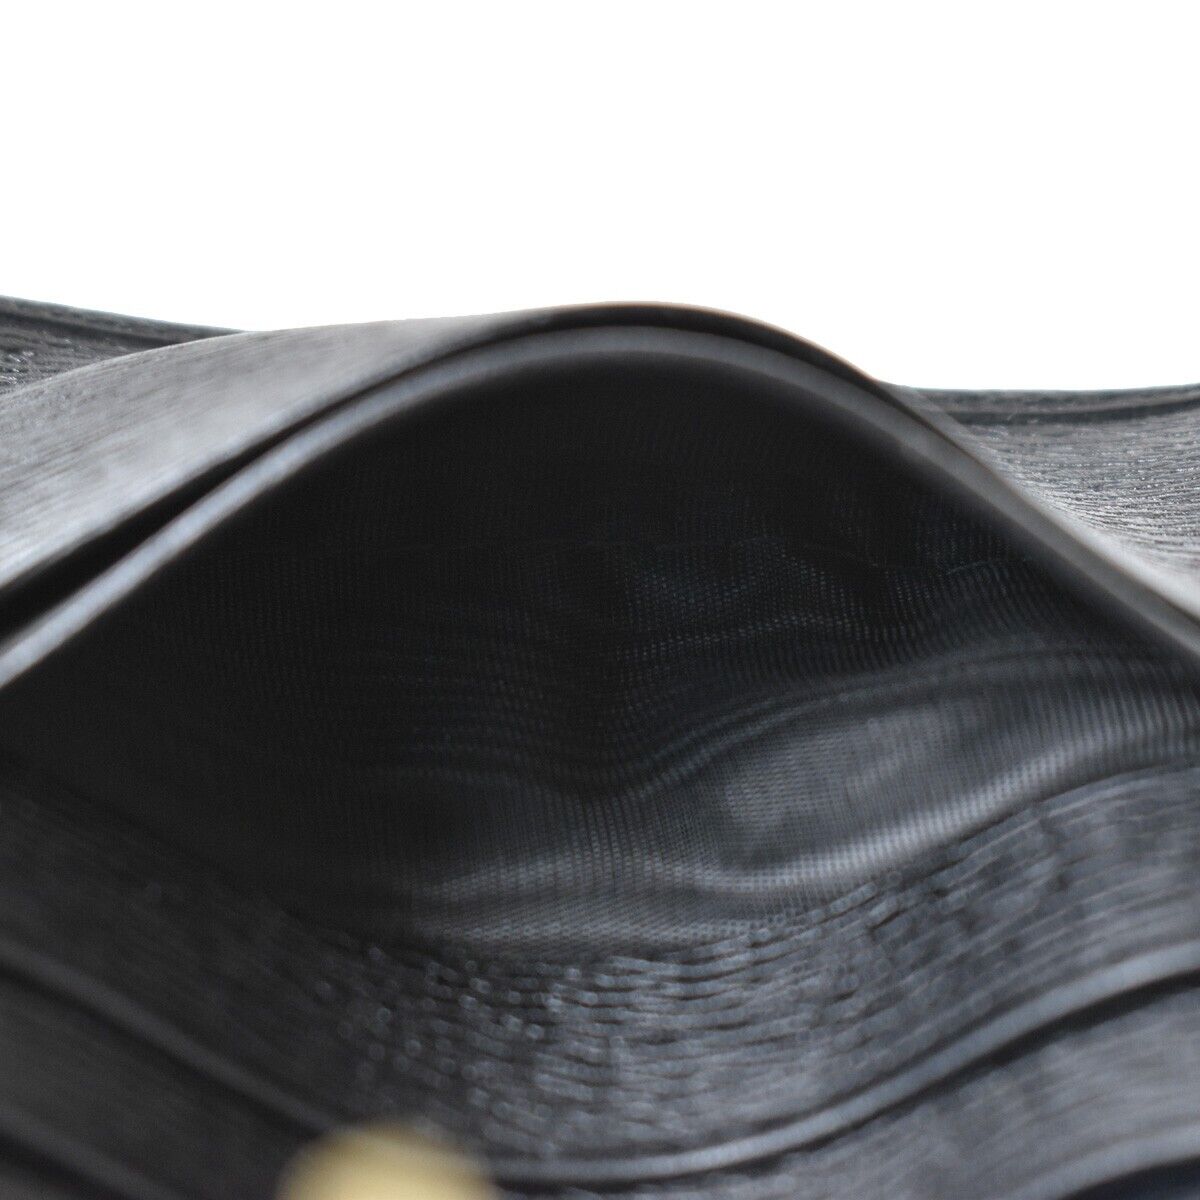 Gucci Unisex Luxury Black Leather Bifold Wallet in Black